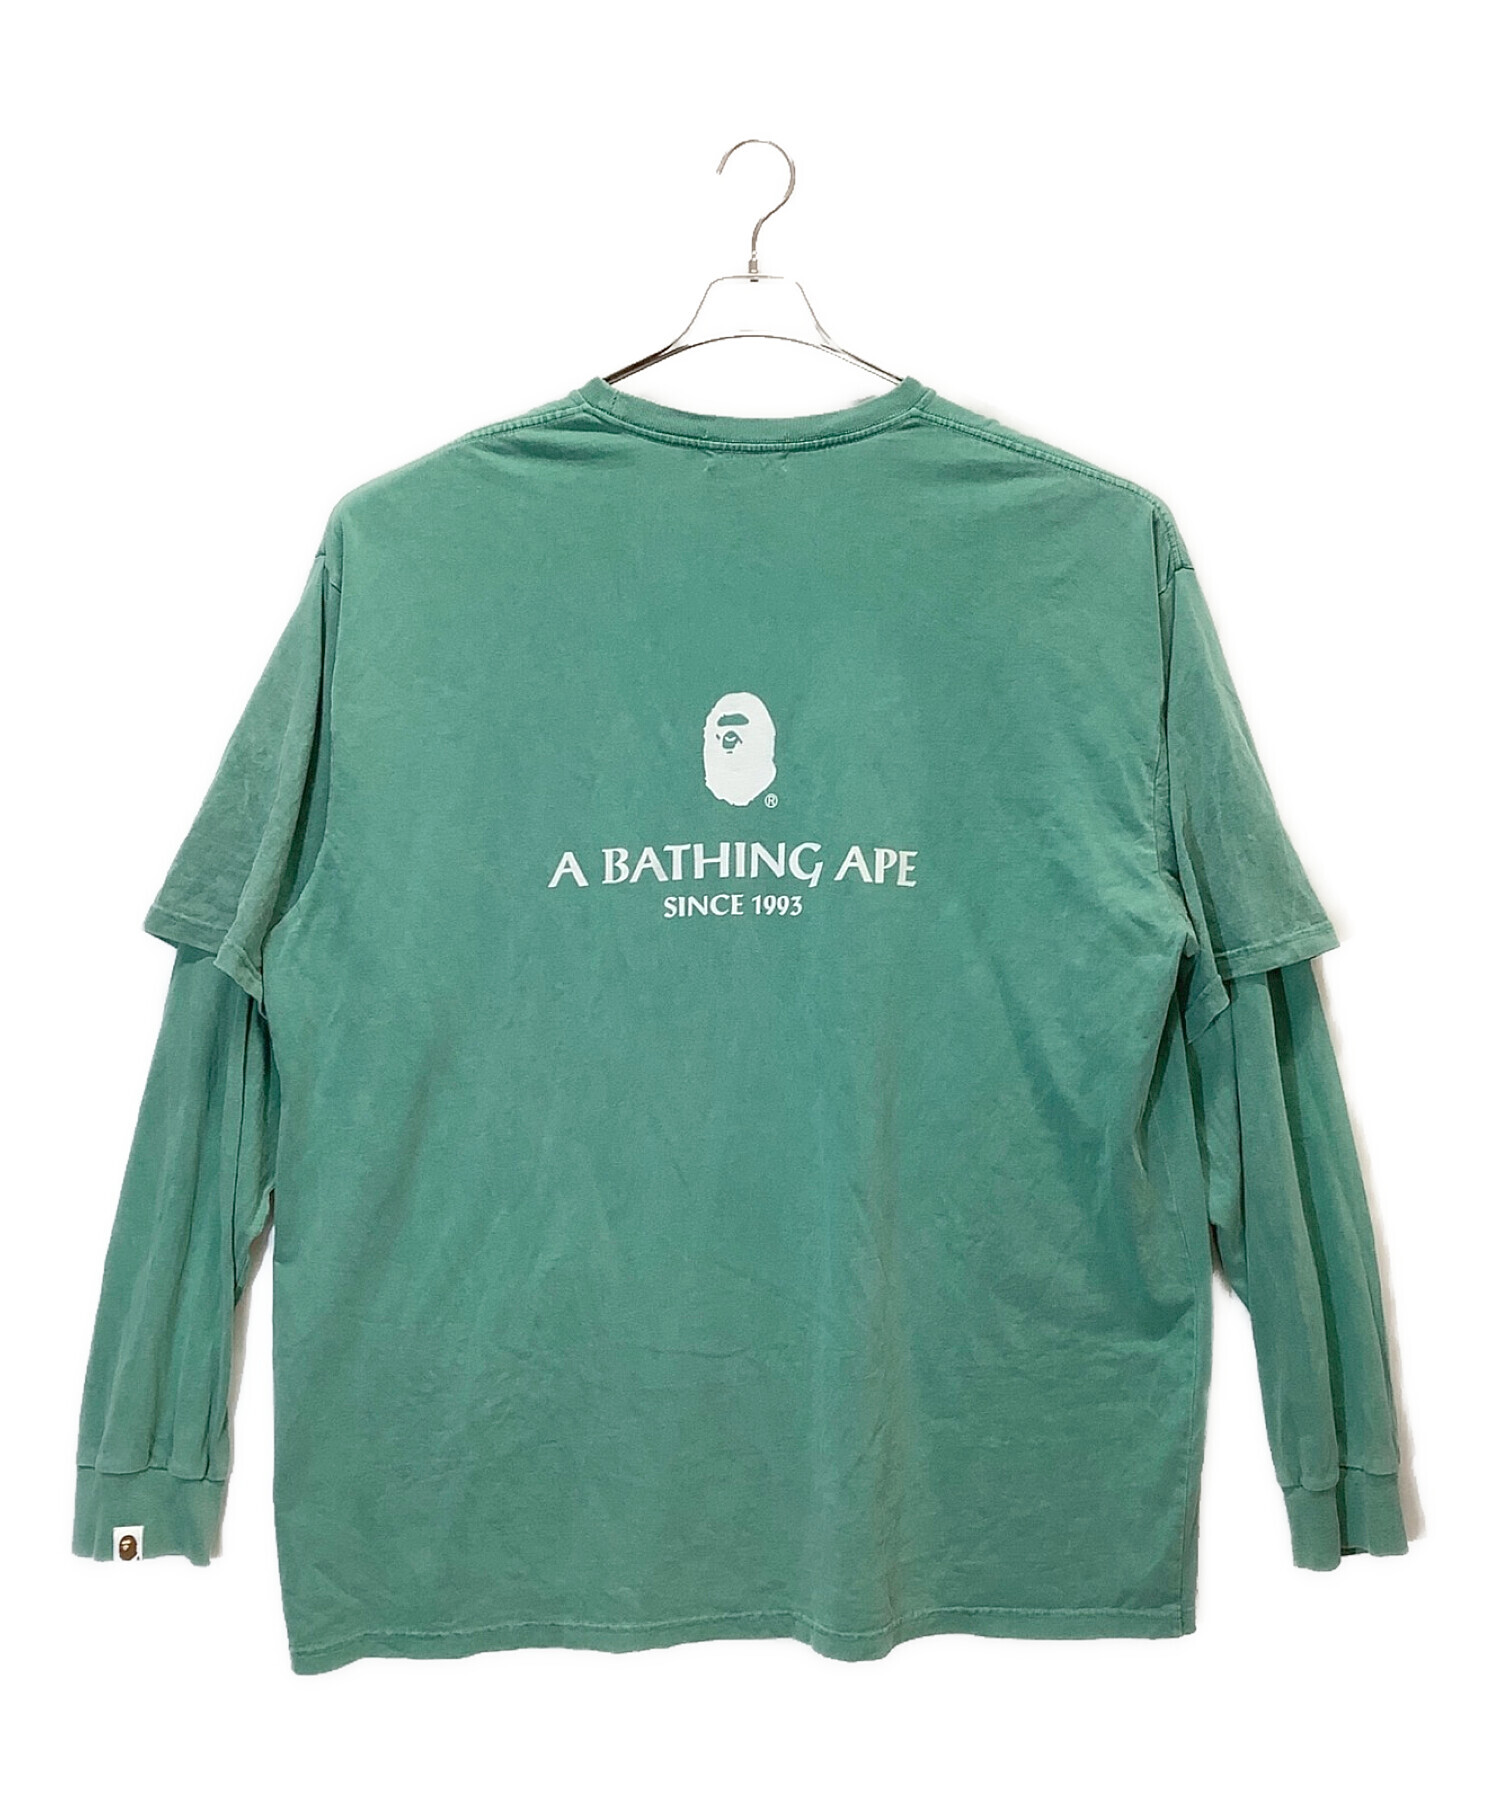 A BATHING APE (アベイシングエイプ) 長袖Tシャツ グリーン サイズ:3XL